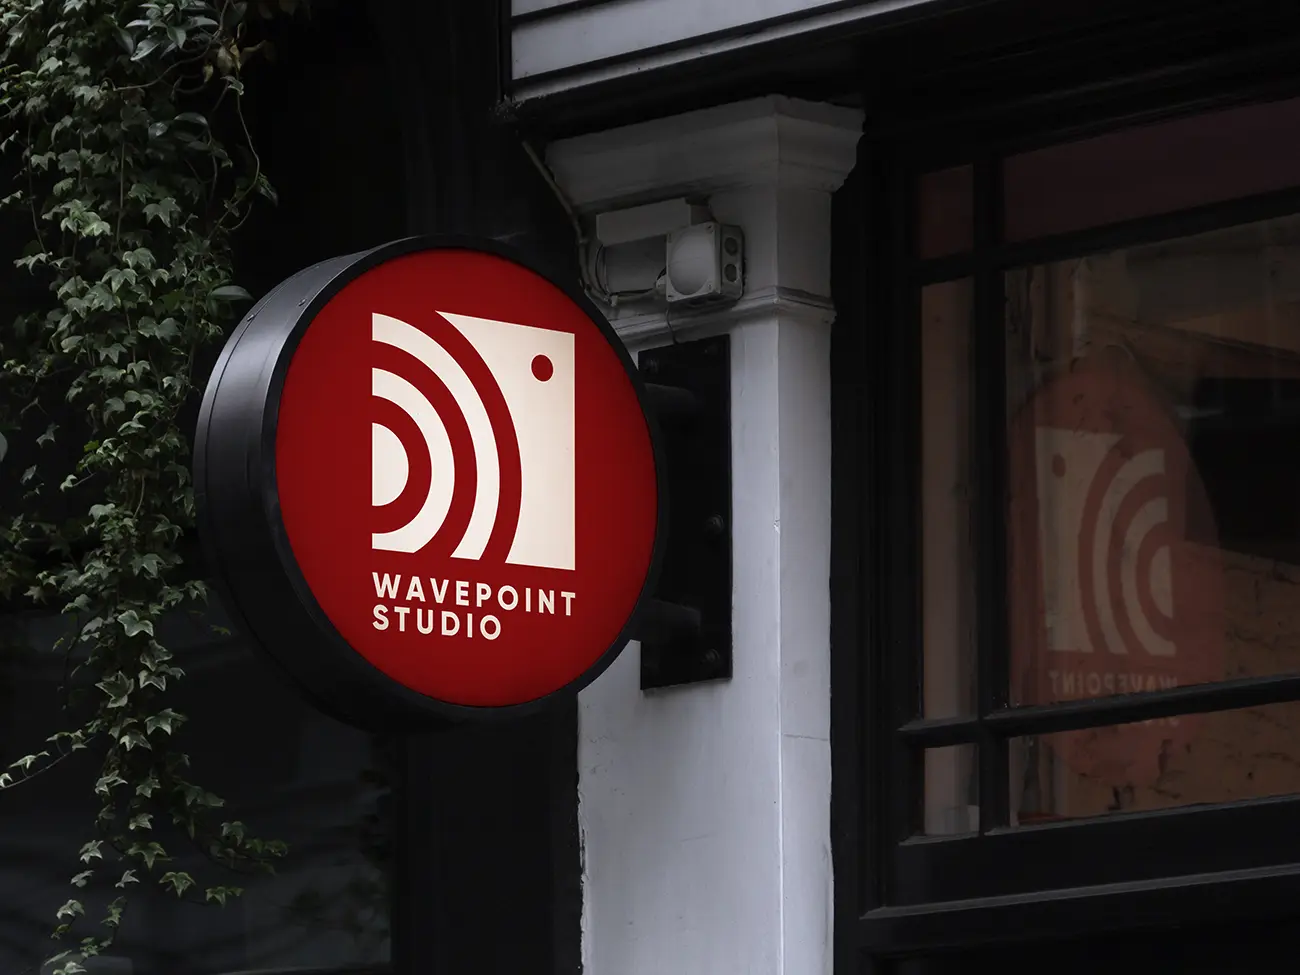 Visuel identitet til Wavepoint Studio